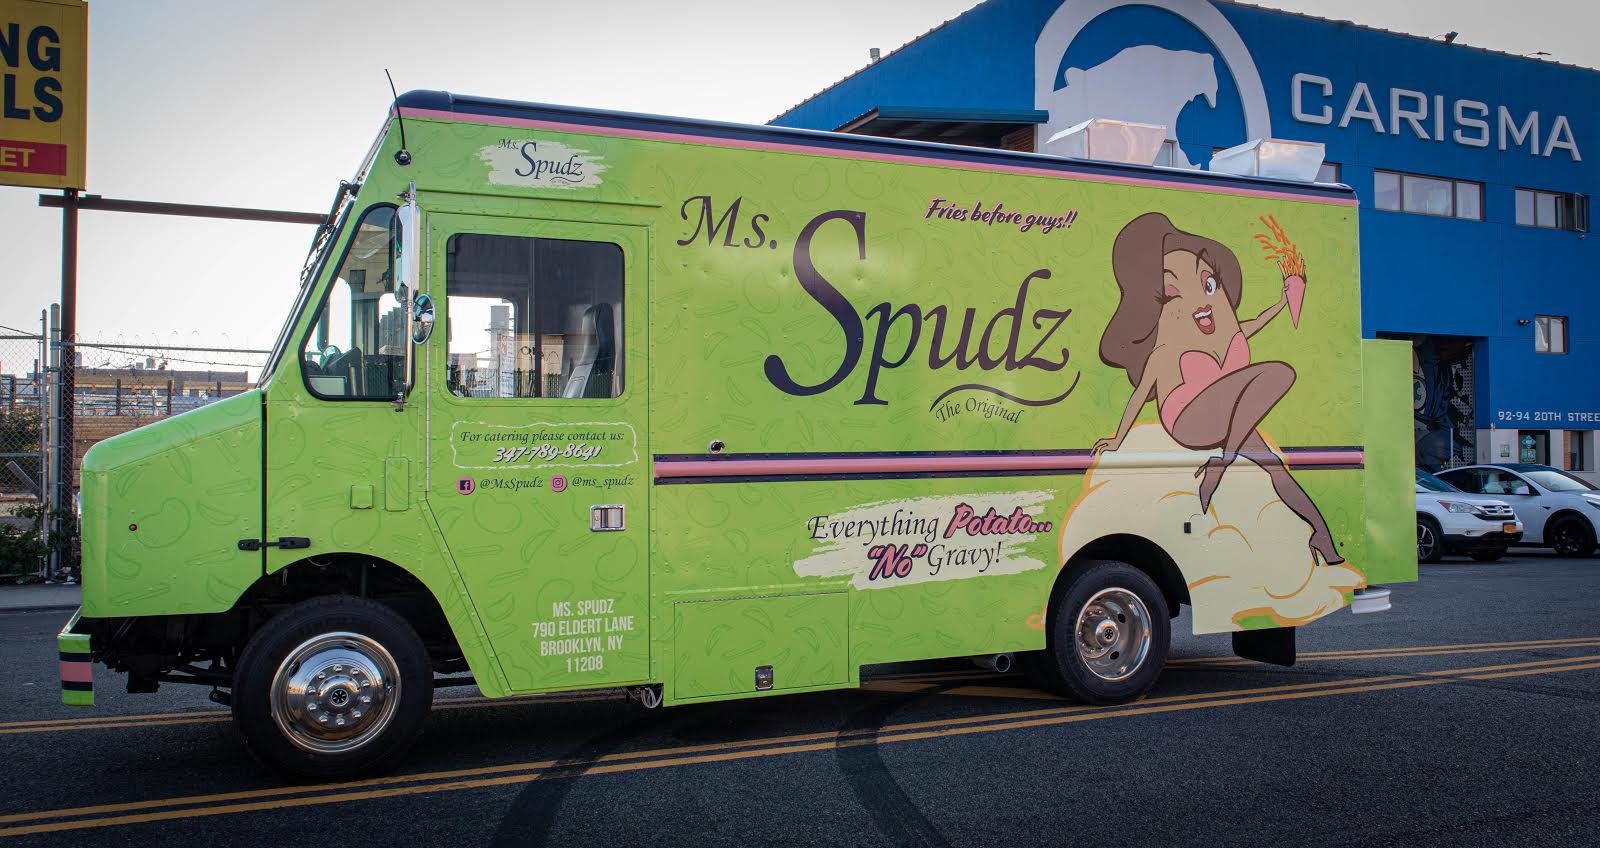 Ms. Spudz food truck